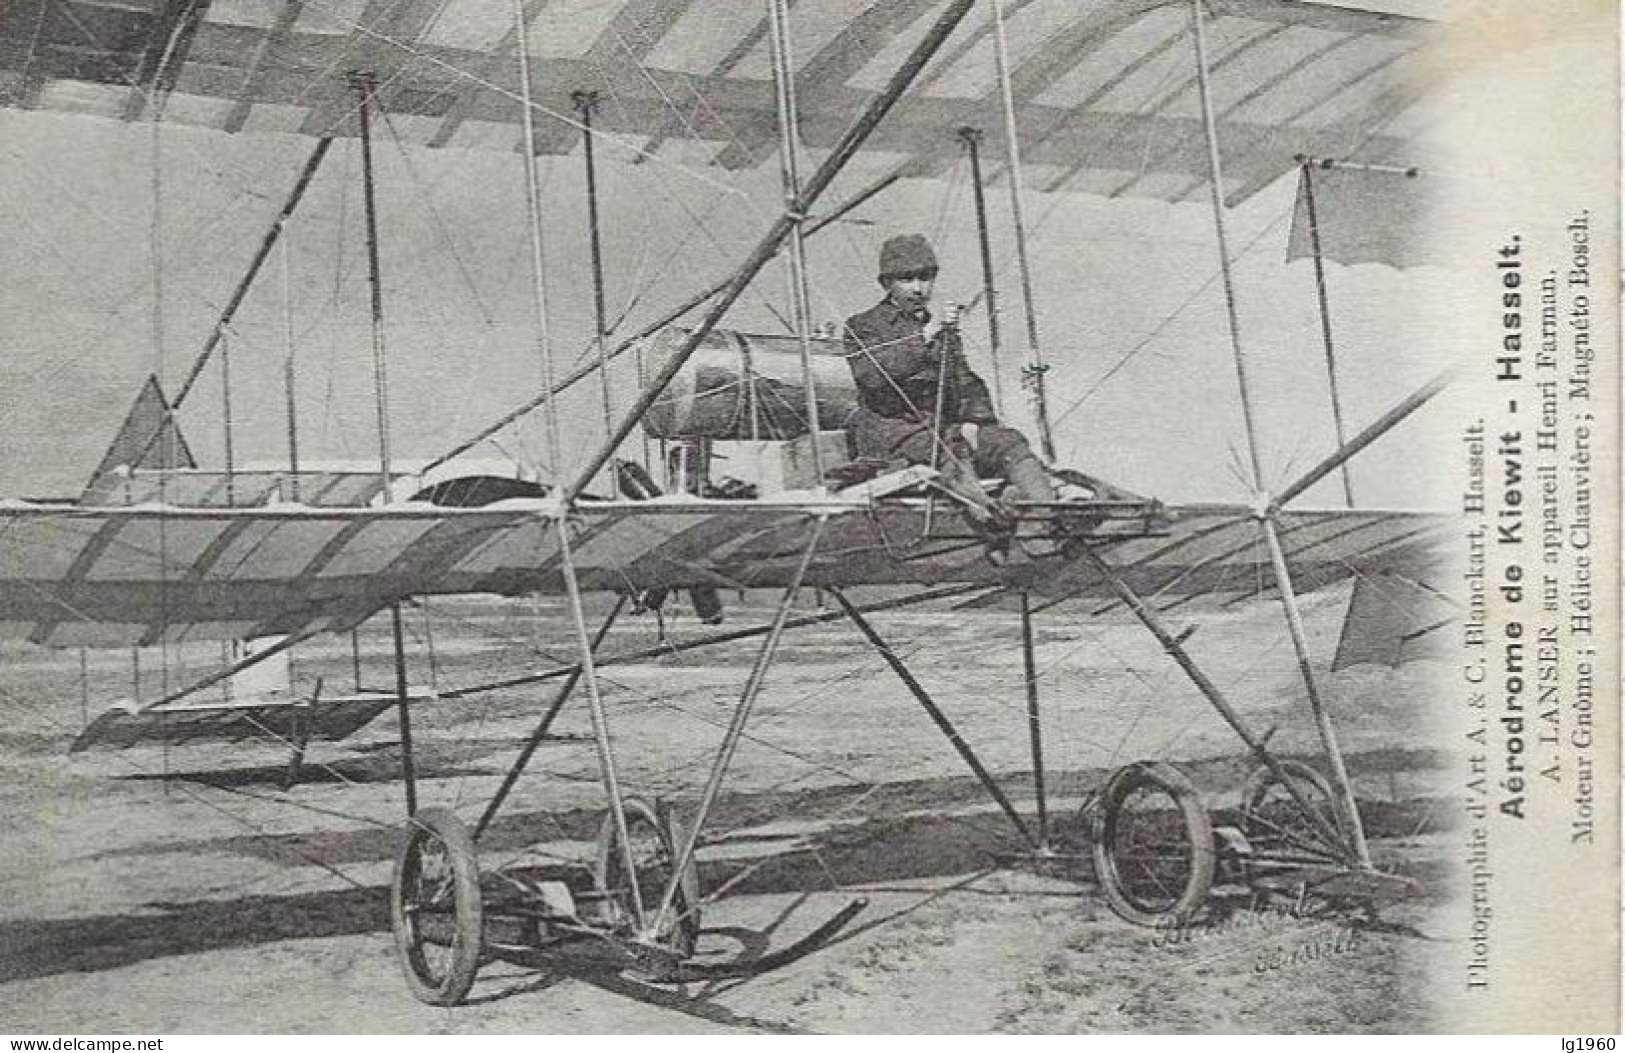 RD - Aerodrome De Kiewit  - A. Lanser - 1910 - Hasselt